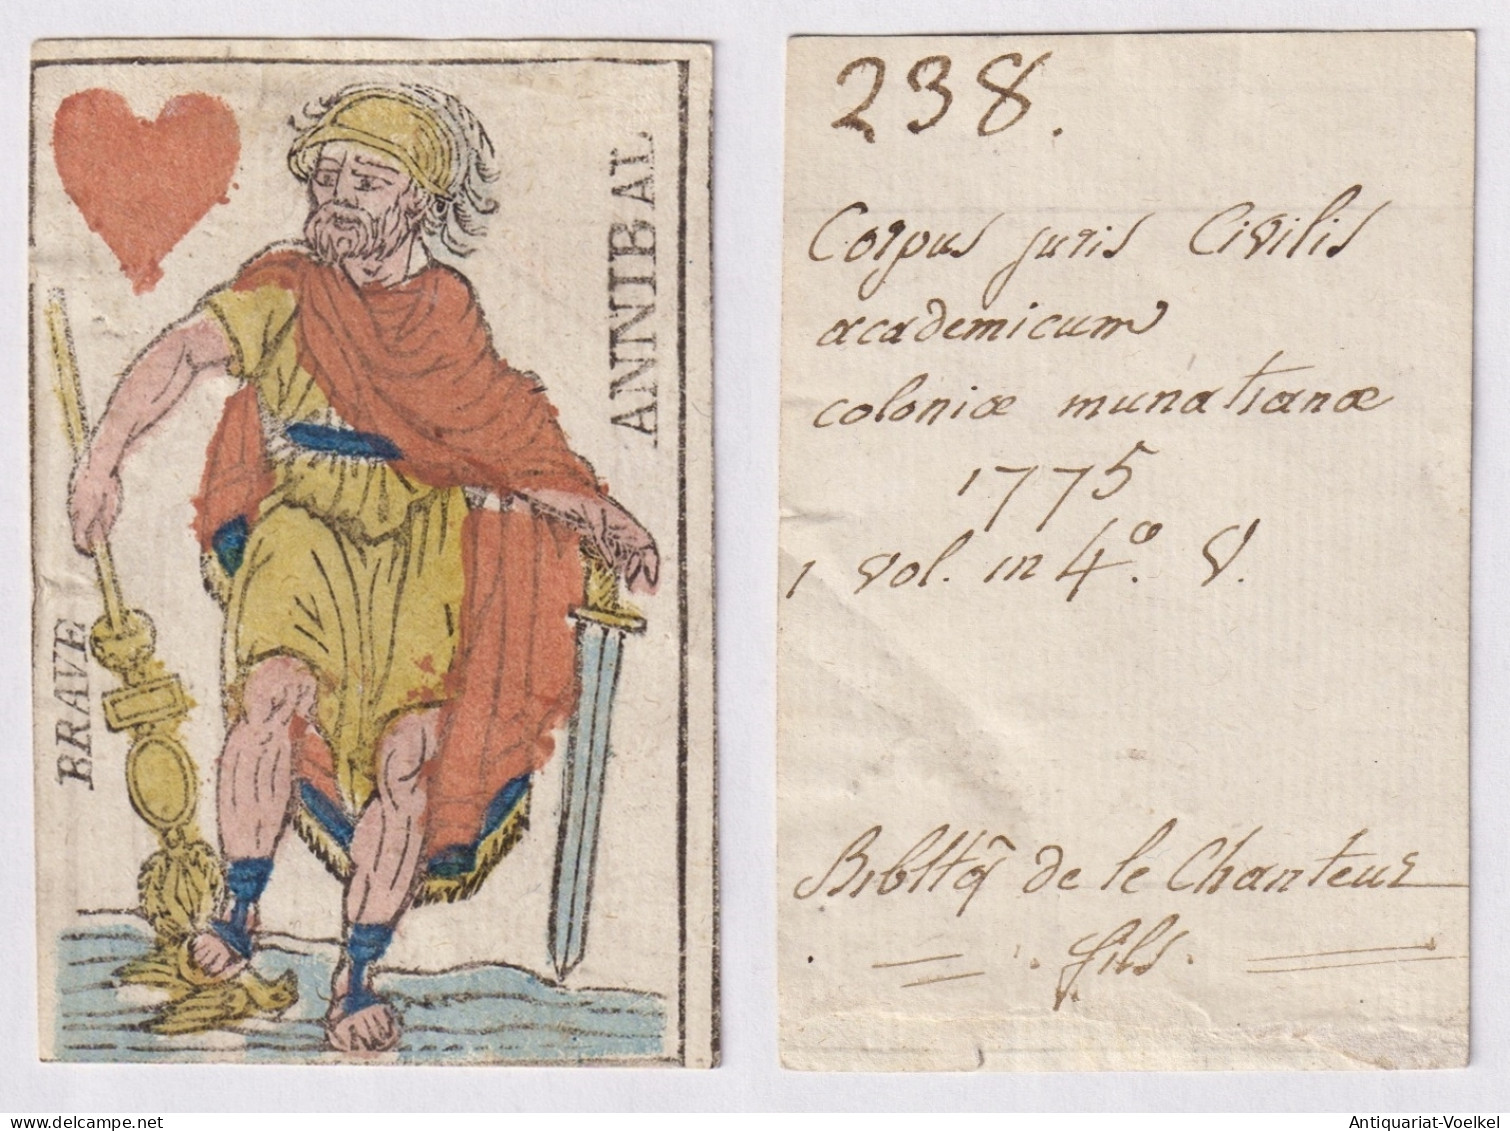 (Herz-König) - King Of Hearts / Roi De Coeur / Playing Card Carte A Jouer Spielkarte Cards Cartes - Jouets Anciens